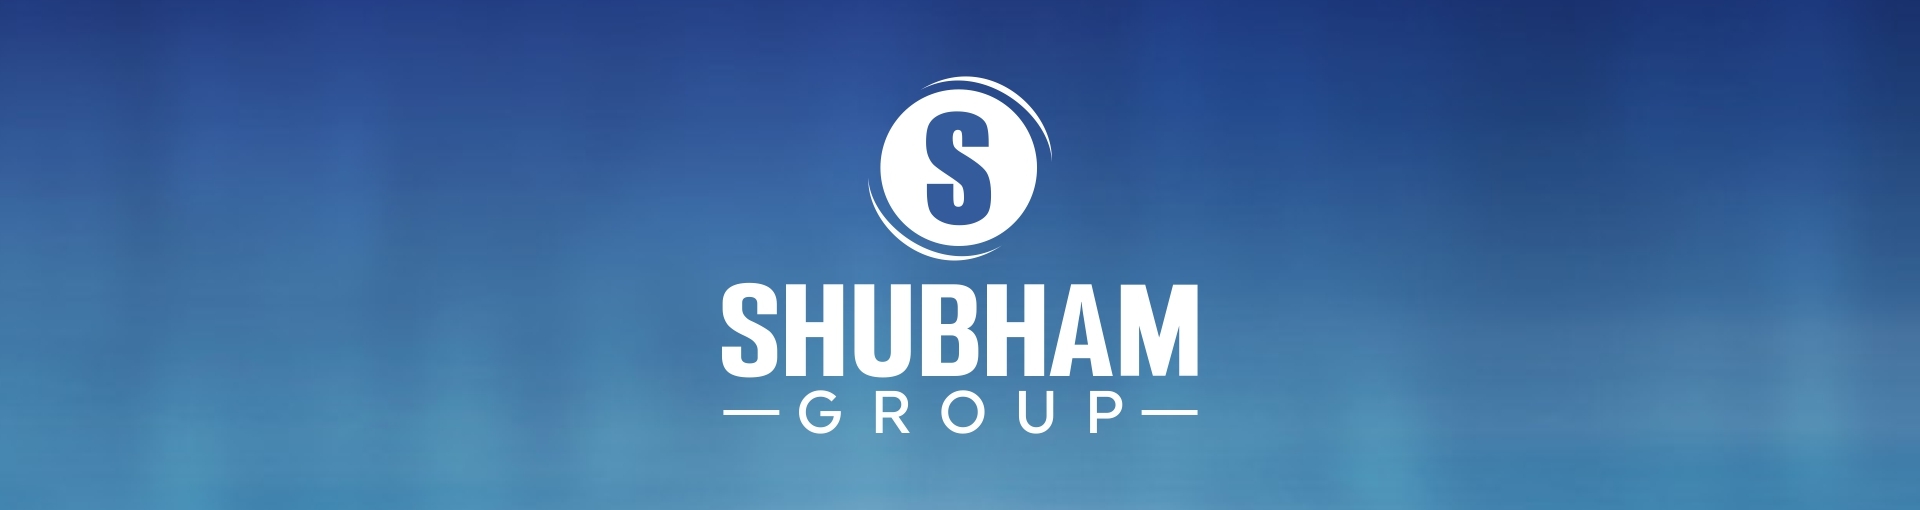 Shubham Landge - Founder - GF International | LinkedIn